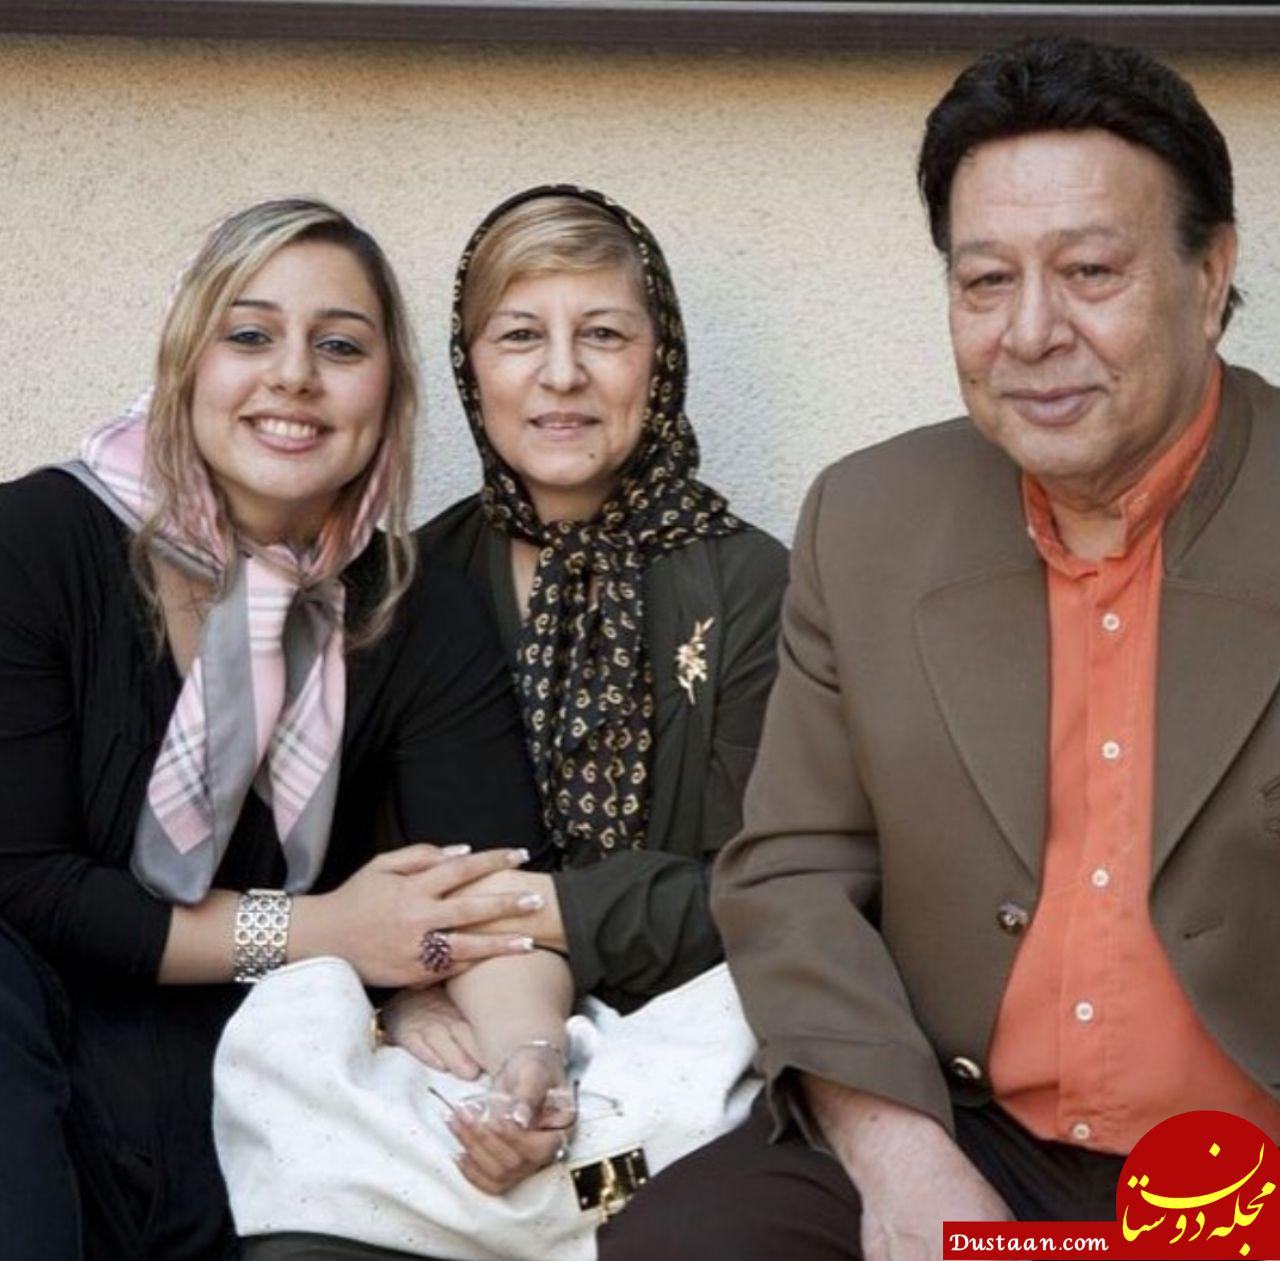 www.dustaan.com-مرحوم حسین عرفانی به همراه همسر و دخترش مهسا +عکس